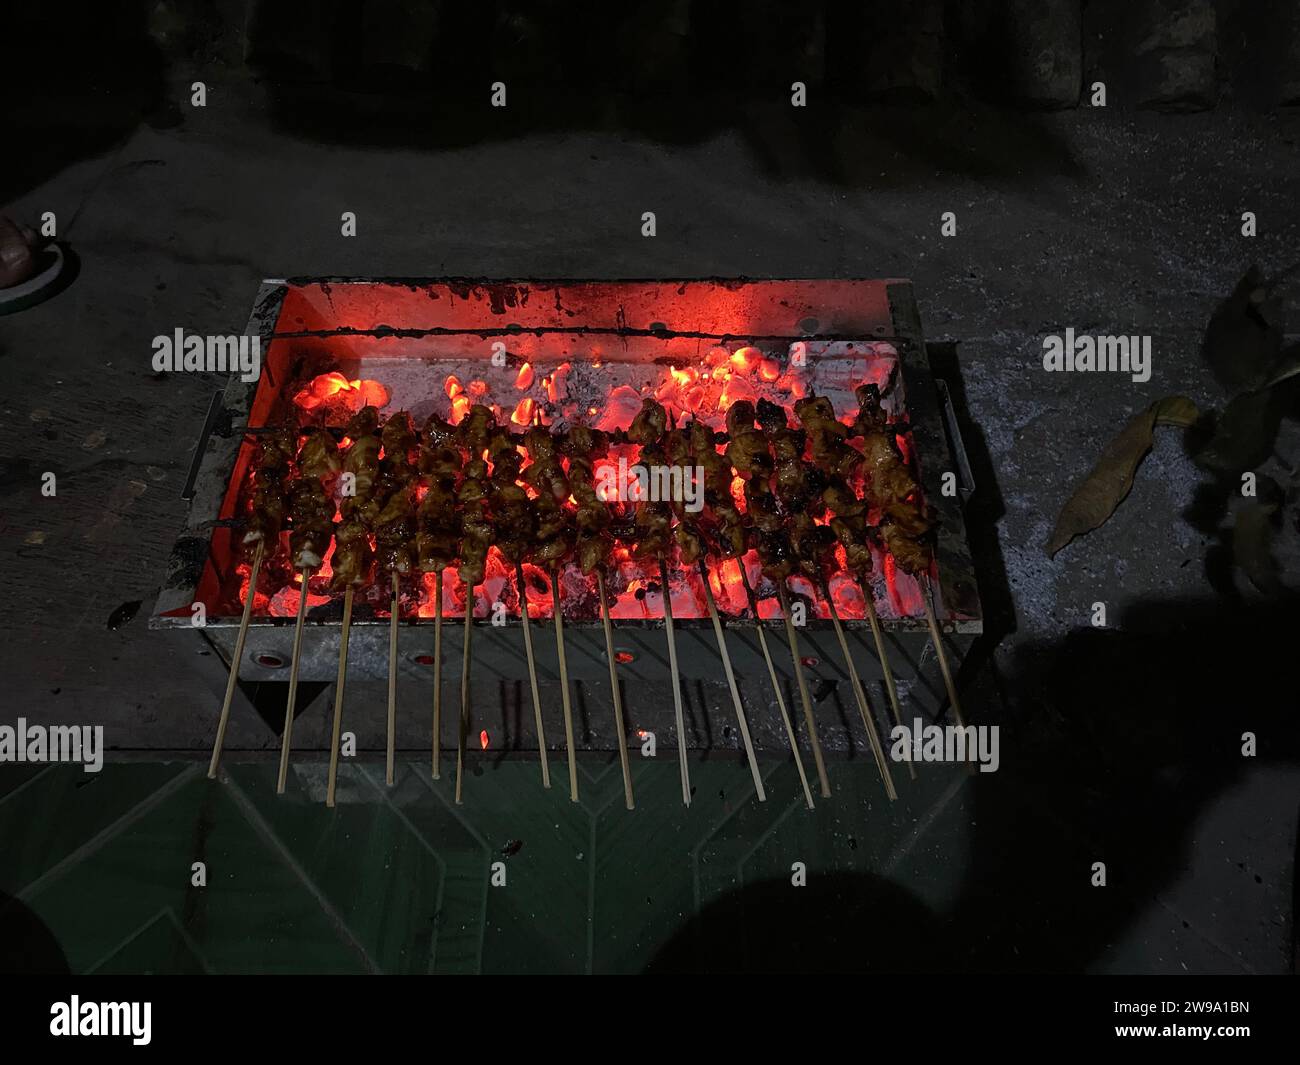 Grillhähnchen Satay mit Holzkohlefeuer. Stockfoto